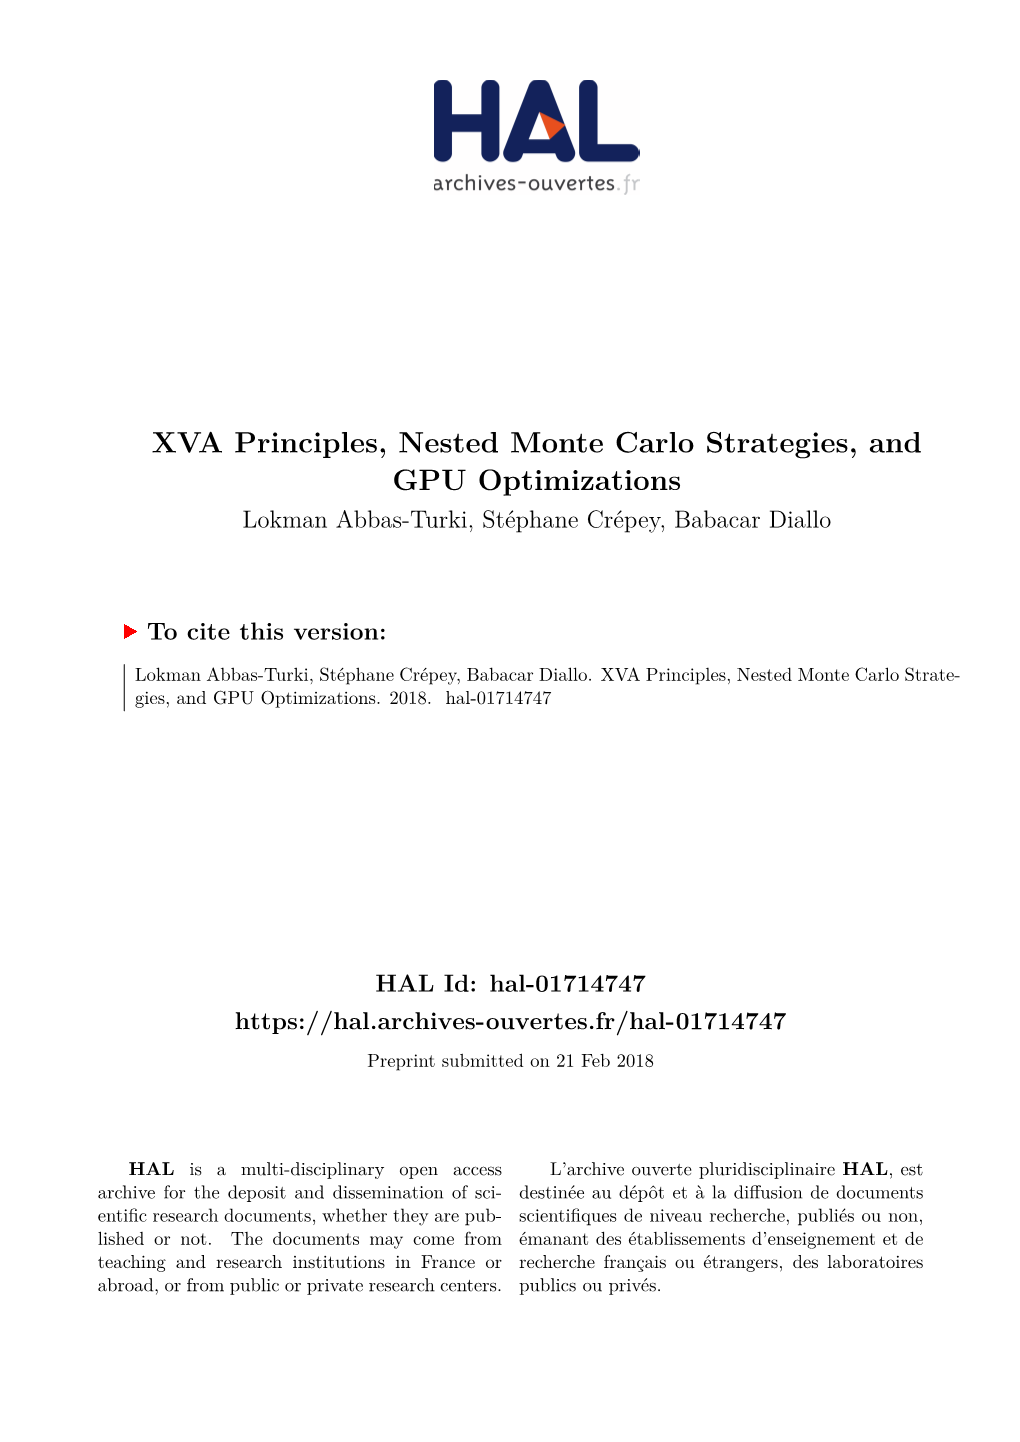 XVA Principles, Nested Monte Carlo Strategies, and GPU Optimizations Lokman Abbas-Turki, Stéphane Crépey, Babacar Diallo